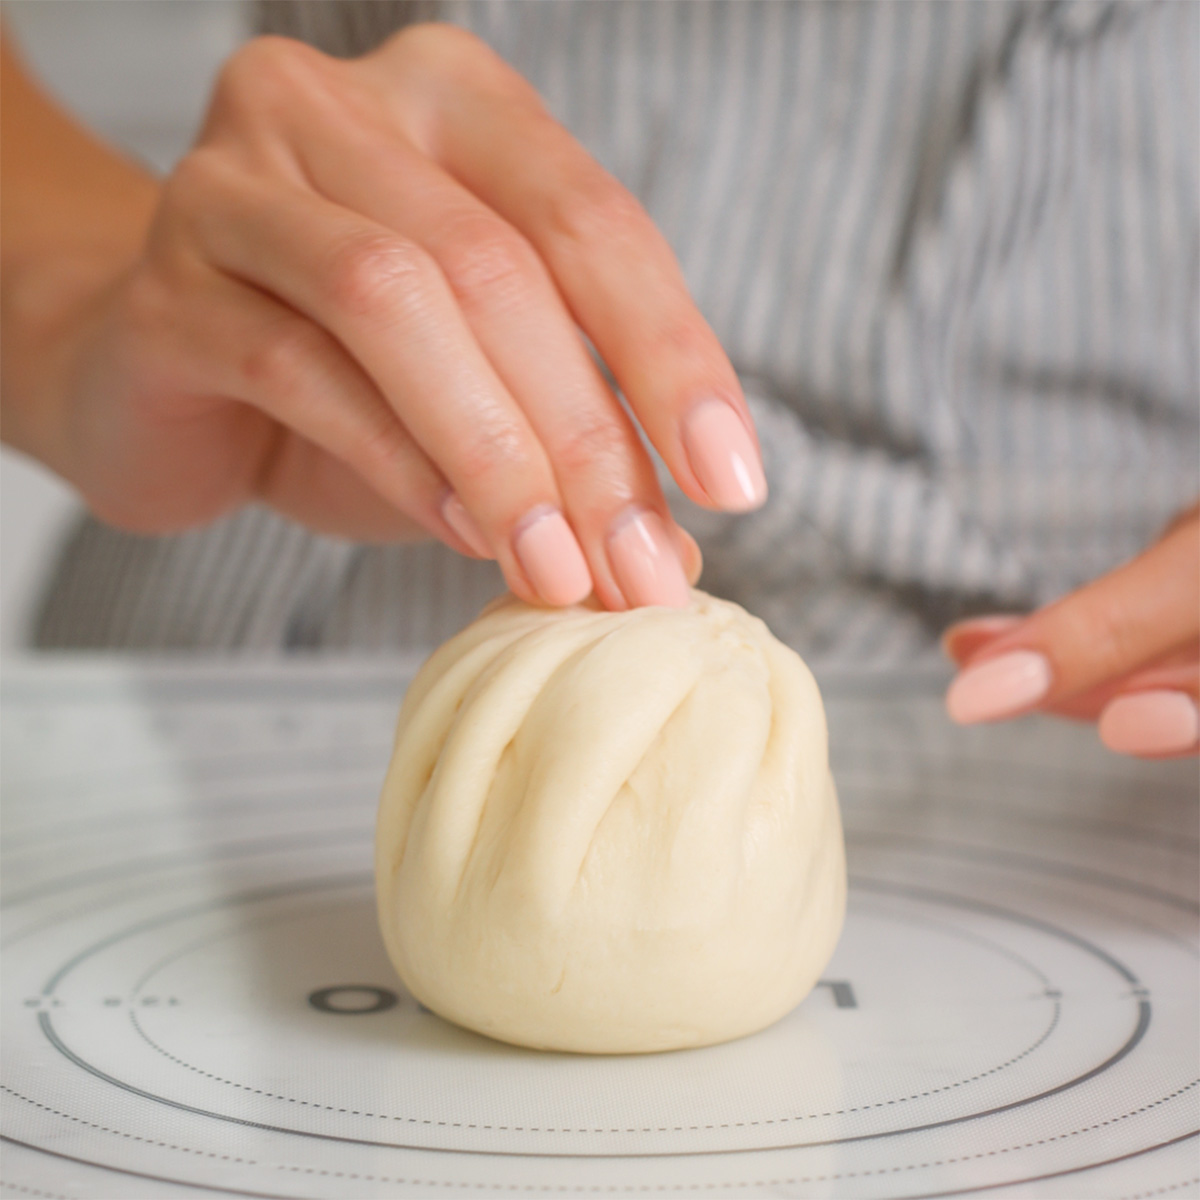 Pinching the dough on a banh bao to seal it.